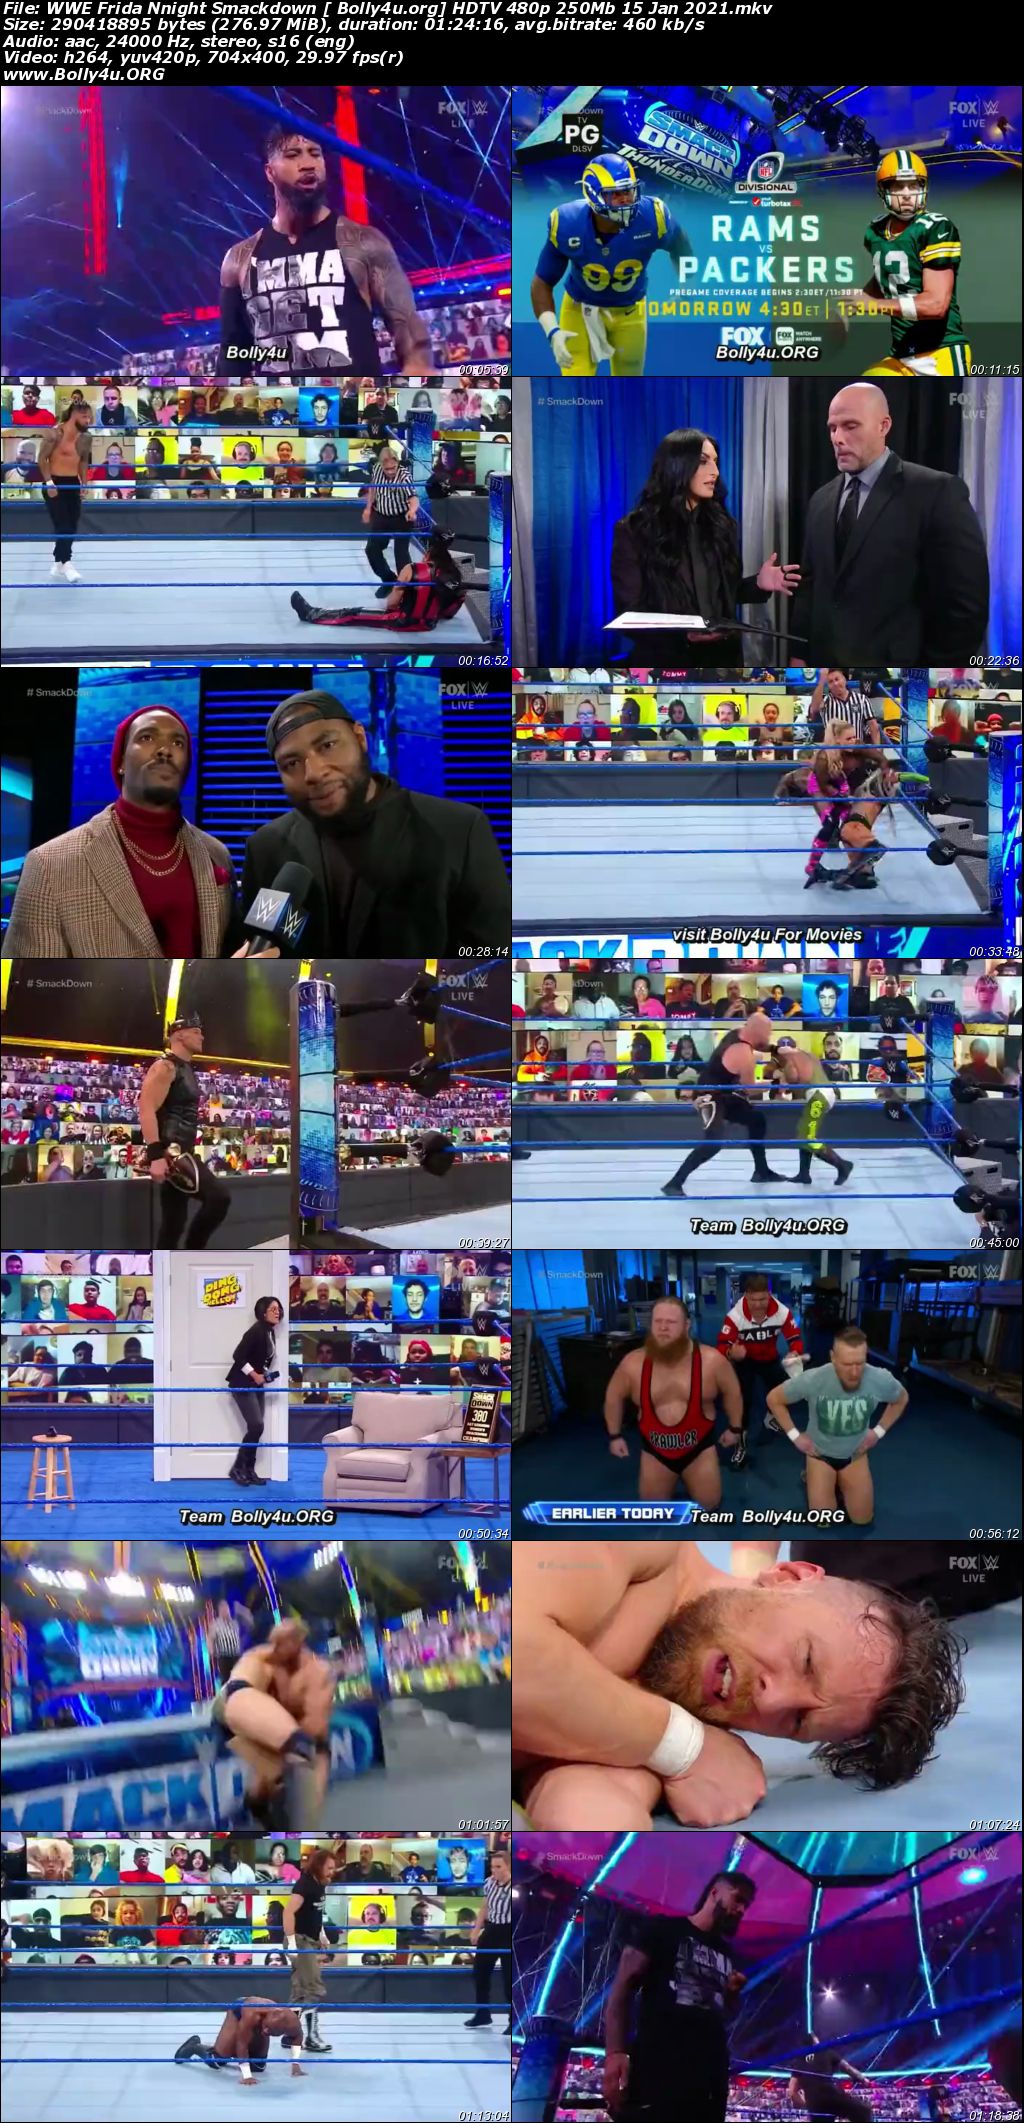 WWE Friday Night Smackdown HDTV 480p 250Mb 15 Jan 2021 Download